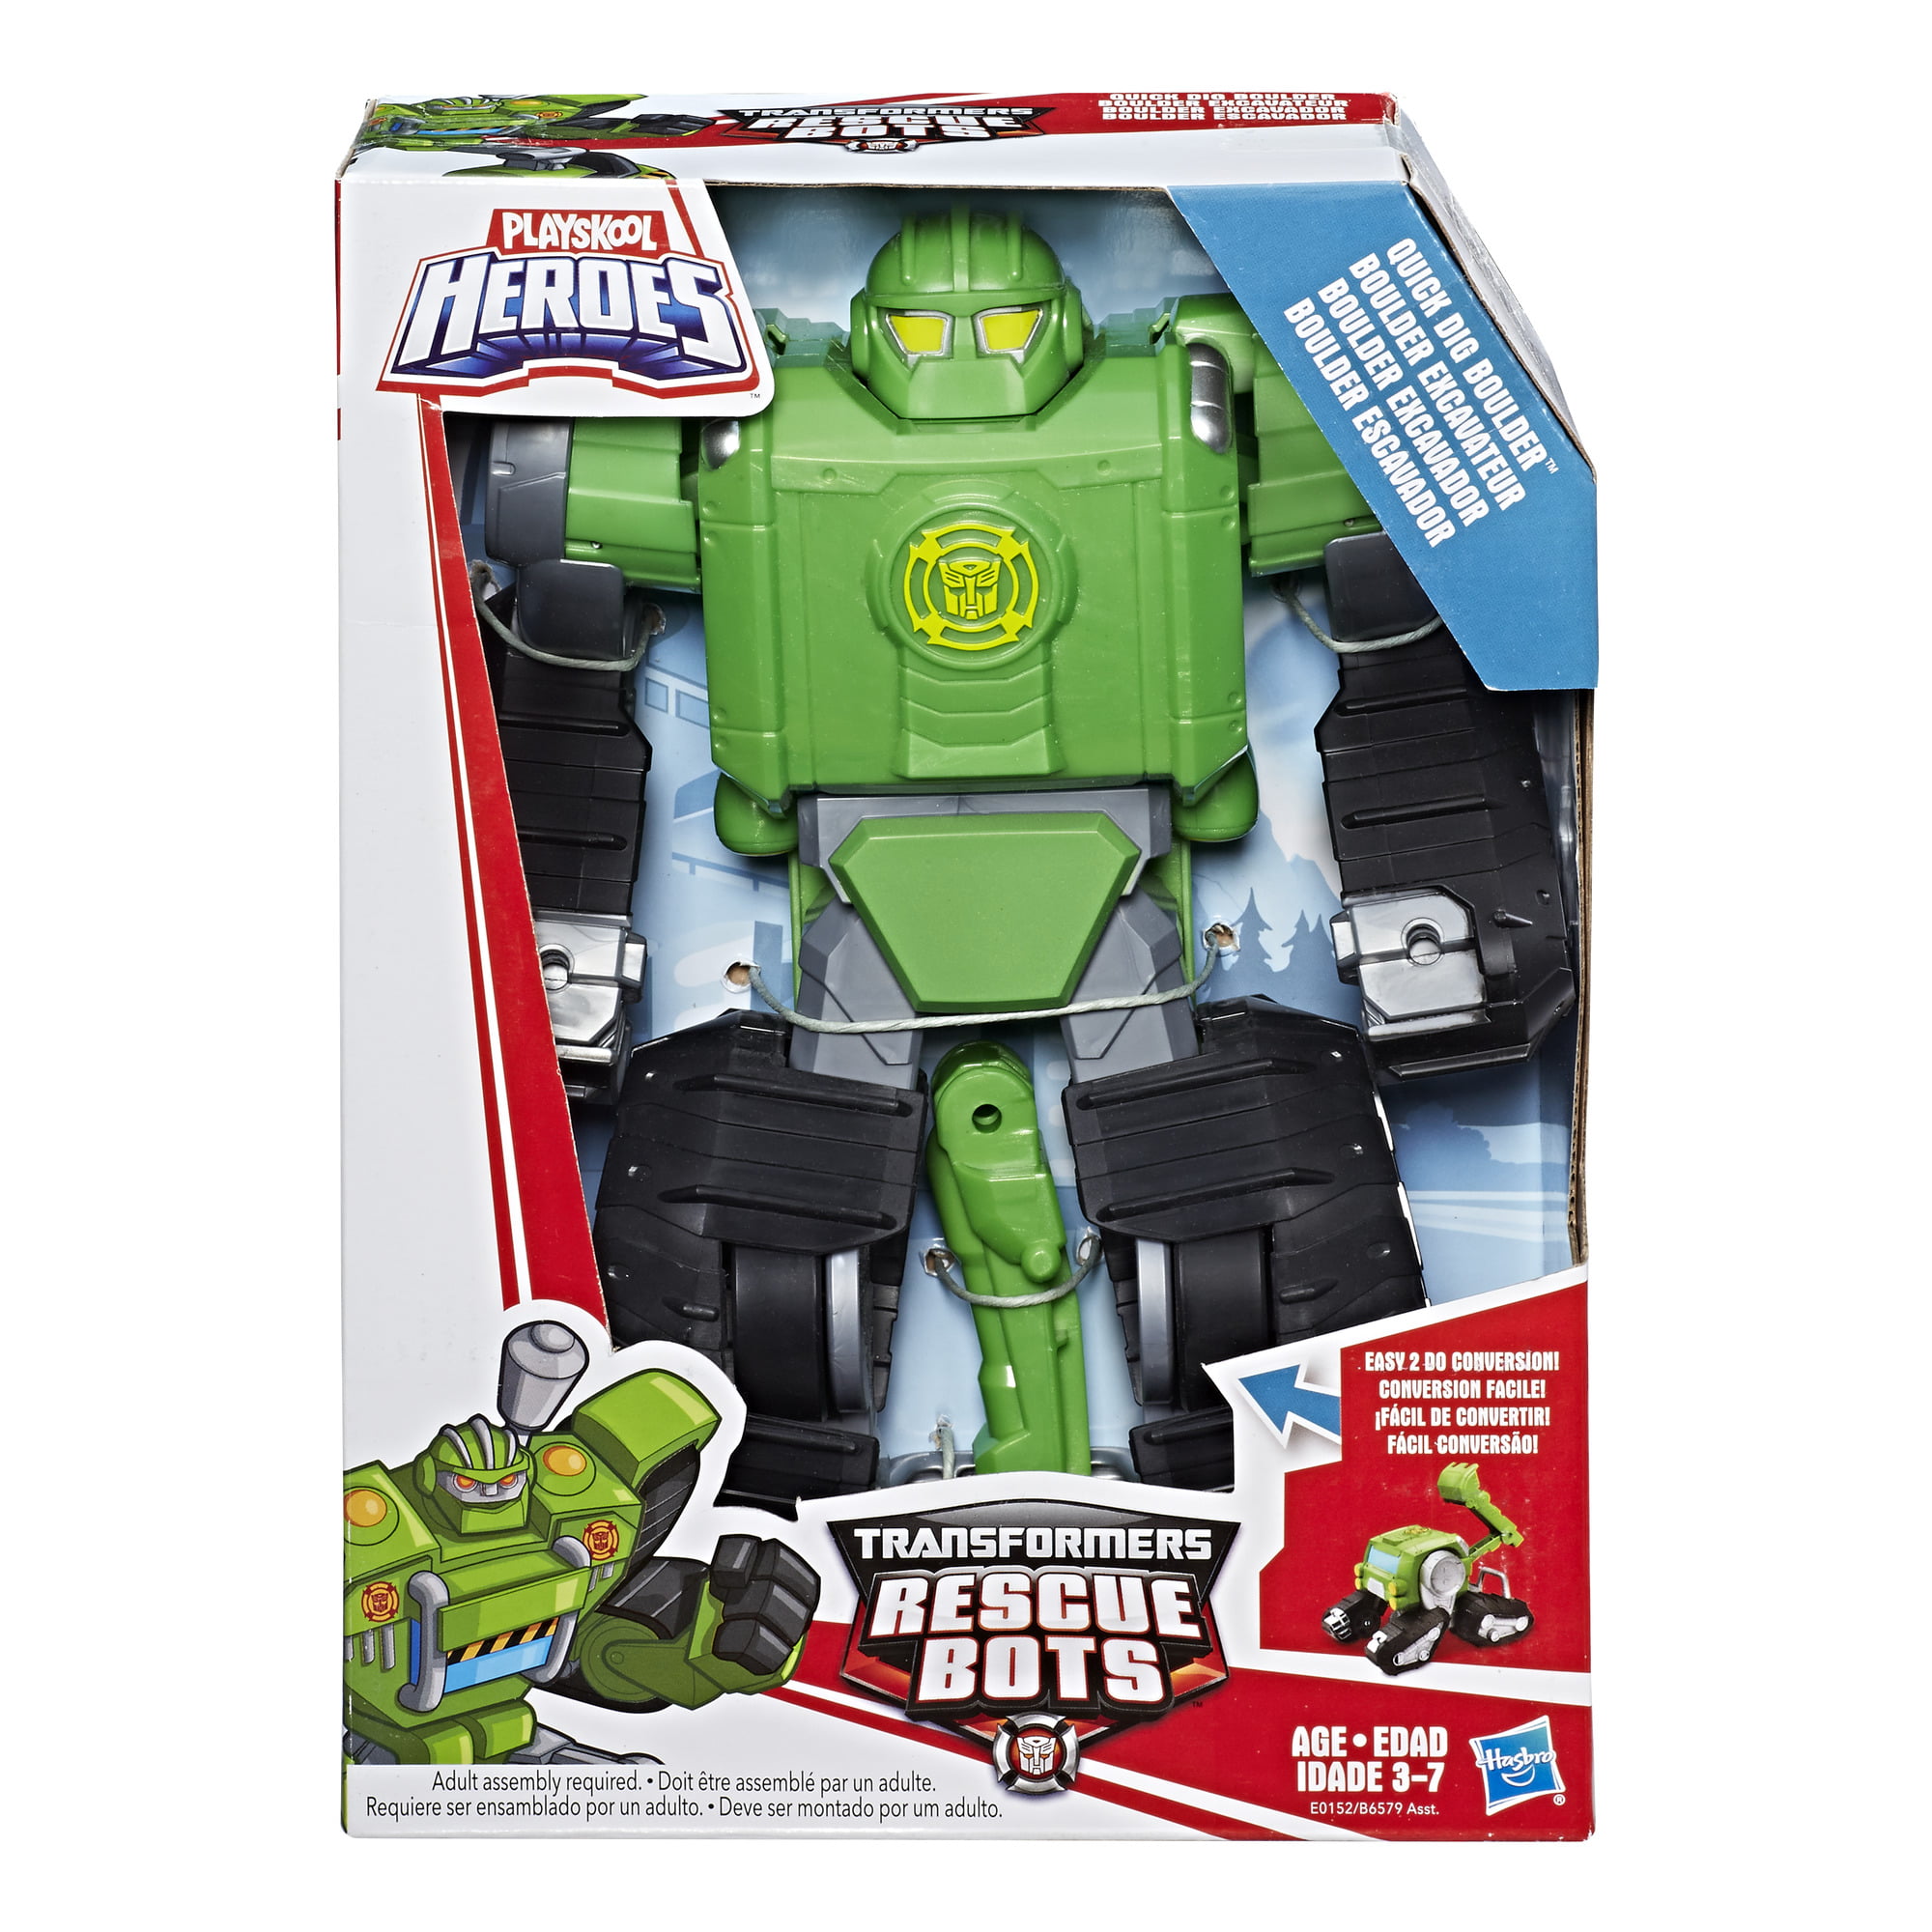 Playskool Heroes Transformers Rescue Bots Quick Dig Boulder